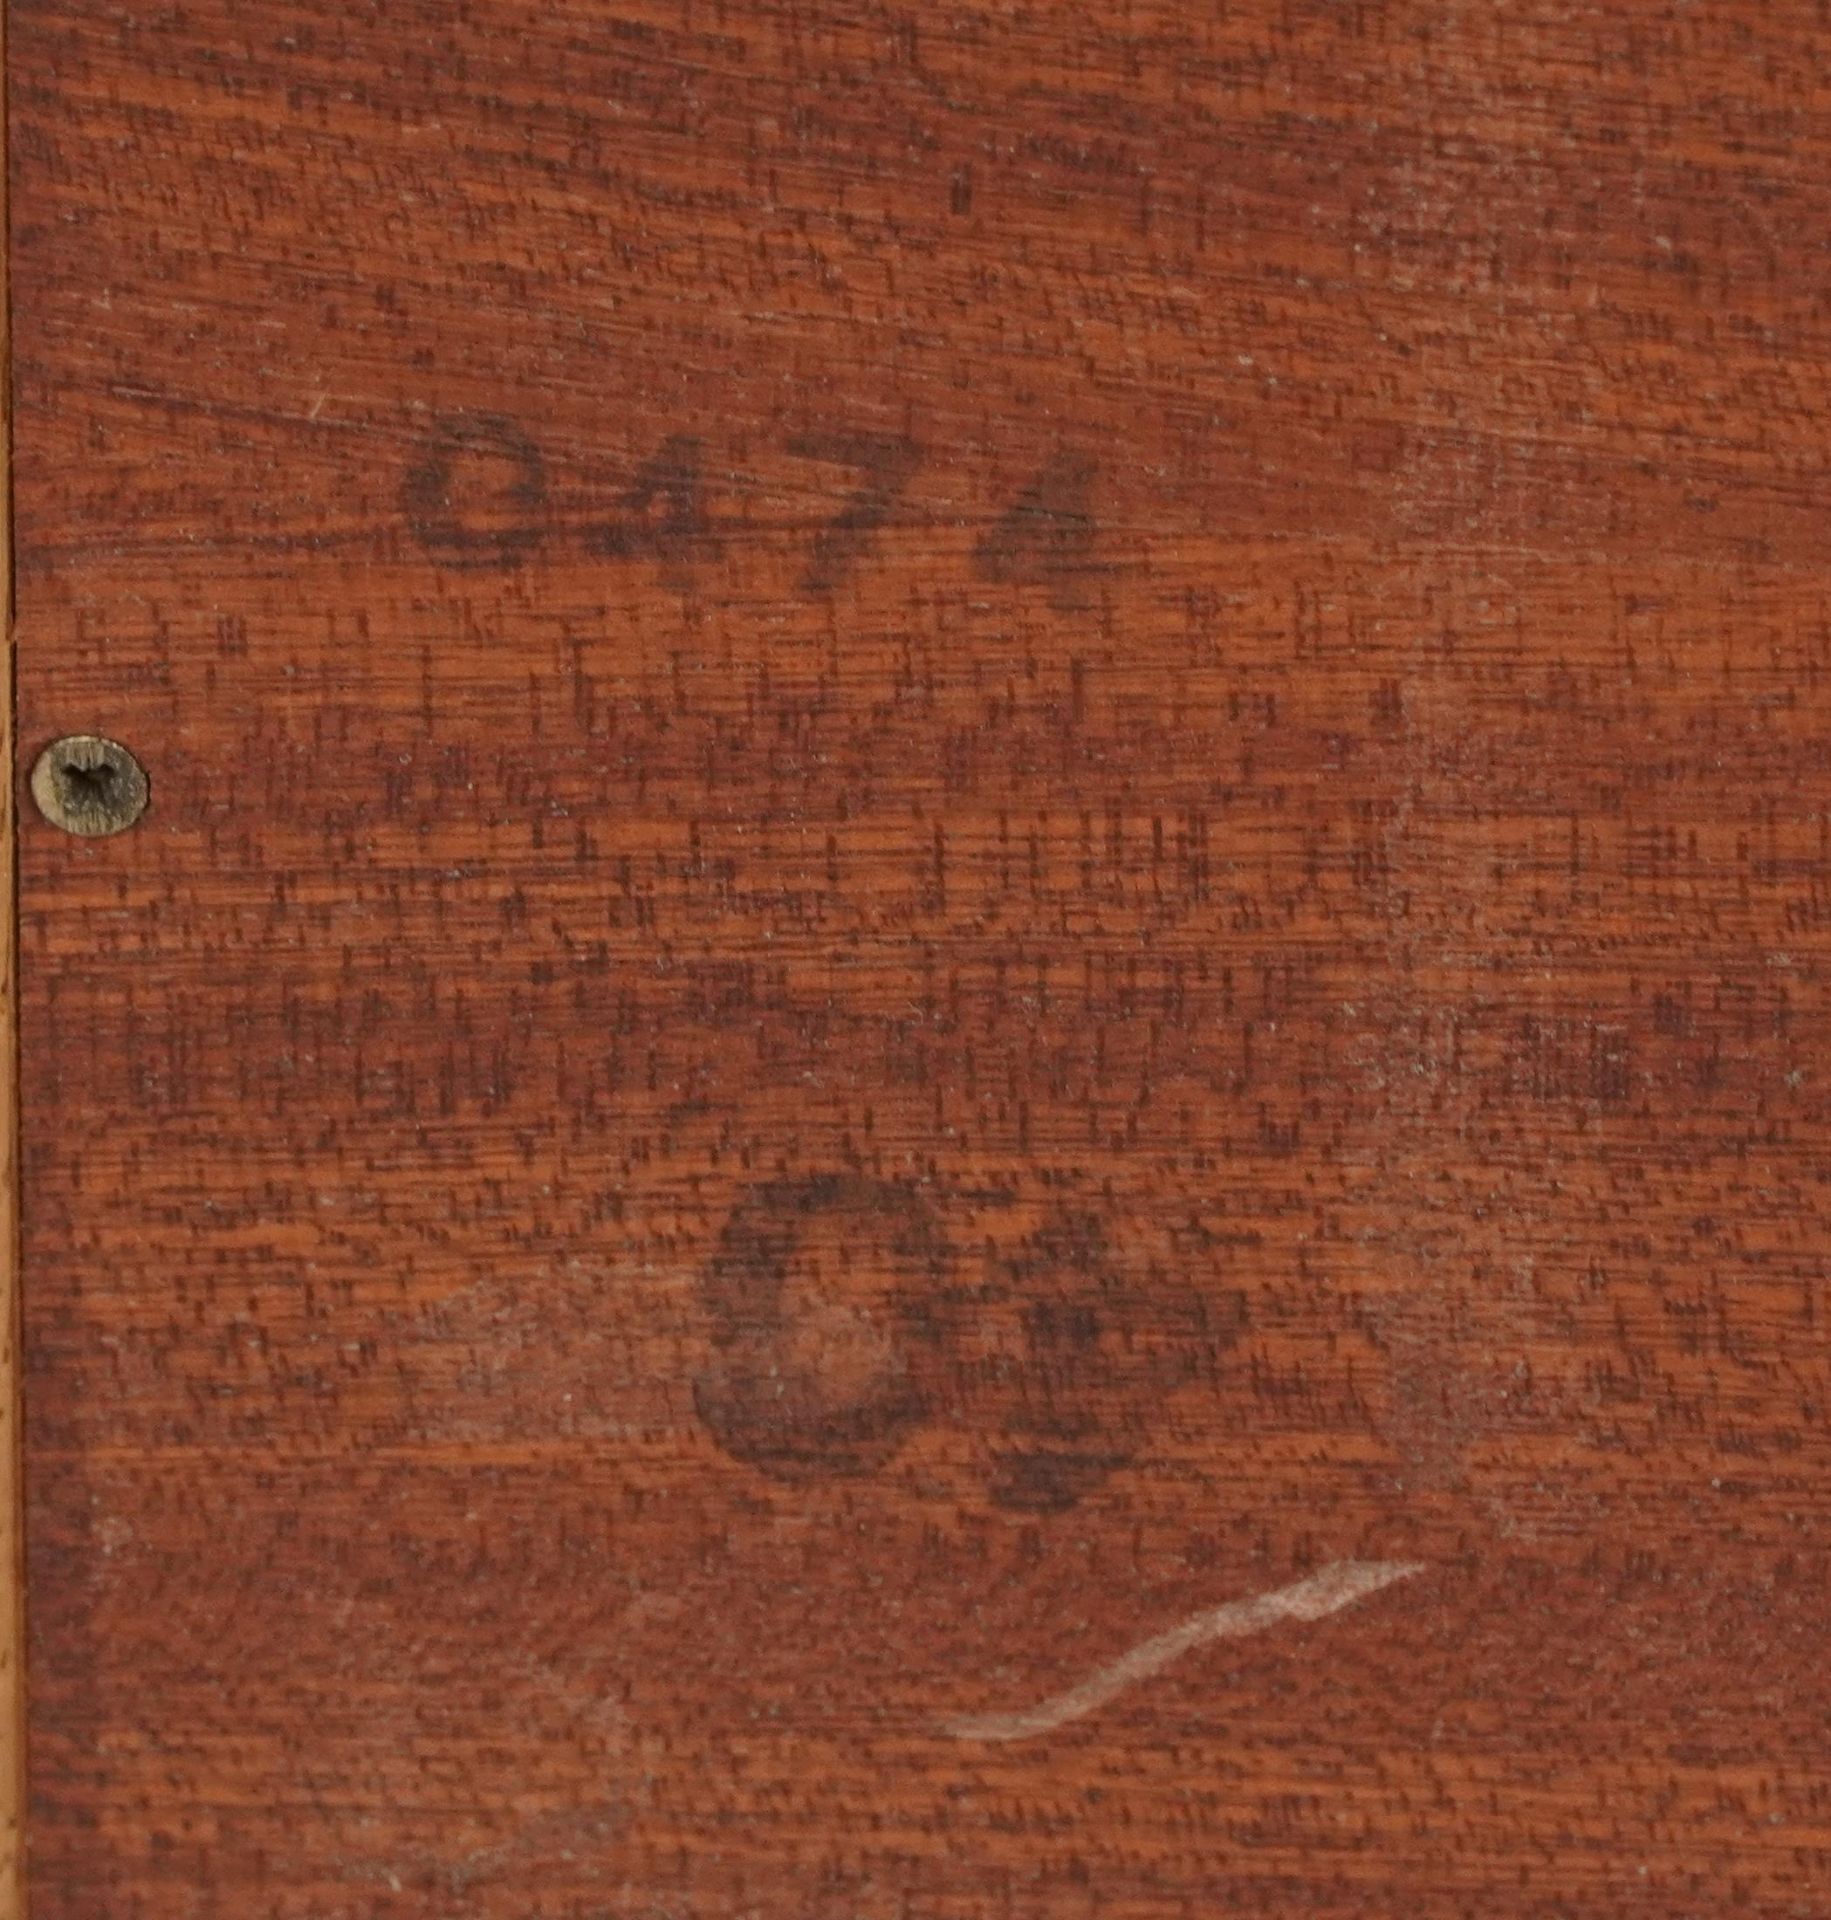 G Plan, Mid century Fresco teak nightstand with base drawer, 54cm H x 46cm W x 41cm D - Image 6 of 6